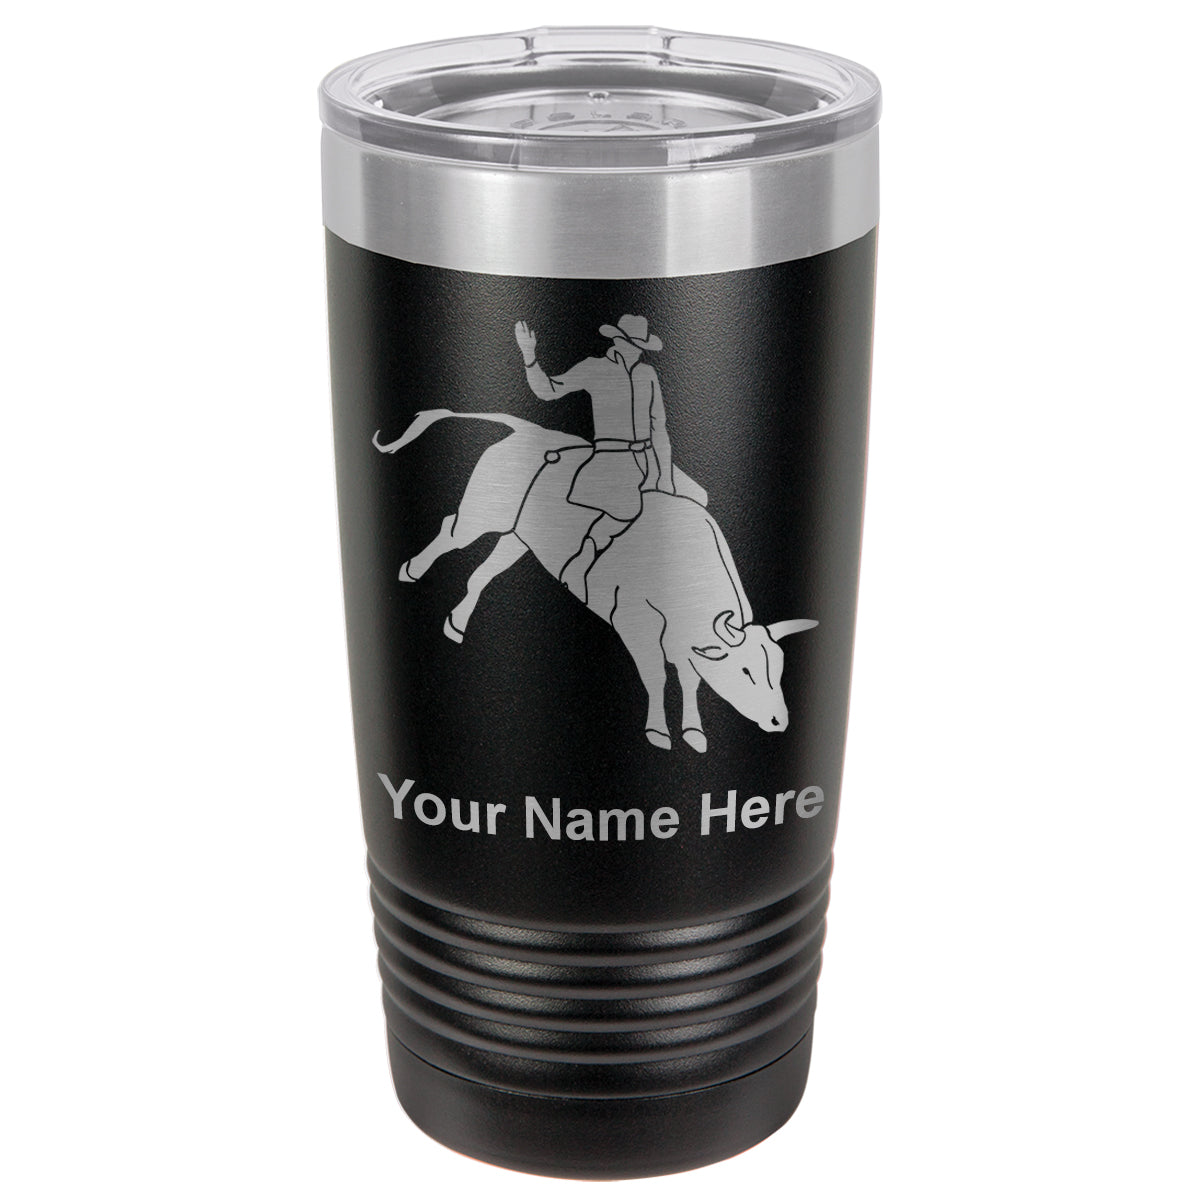 20oz Vacuum Insulated Tumbler Mug, Bull Rider Cowboy, Personalized Engraving Included